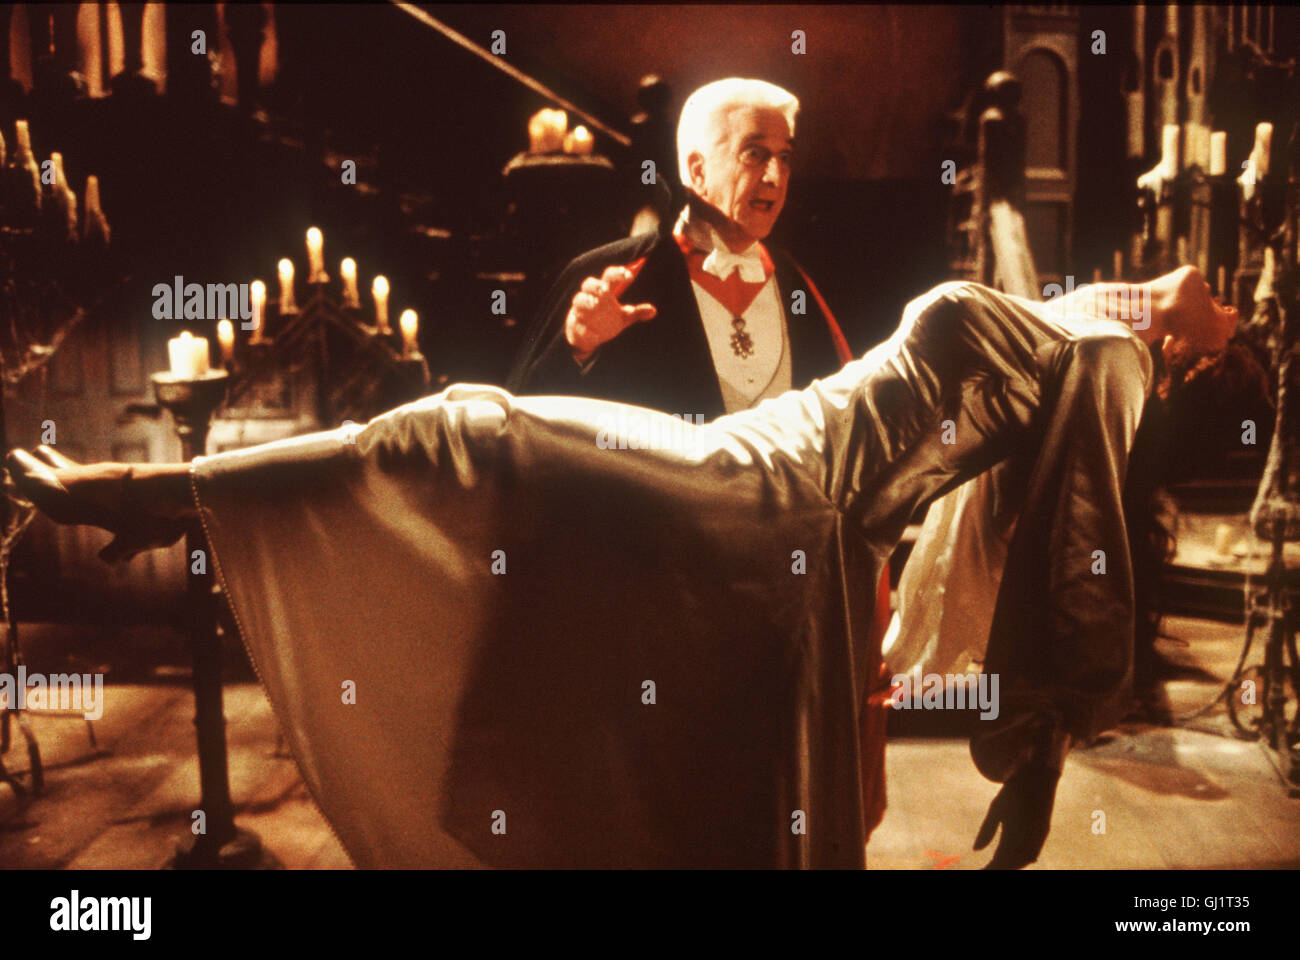 DRACULA - TOT ABER GLÜCKLICH LESLIE NIELSEN Szene: Graf Dracula (LESLIE NIELSEN) hypnotisiert die schwebende Lucy (LYSETTE ANTHONY). Regie: Mel Brooks aka. Dracula - Dead And Loving It Stock Photo